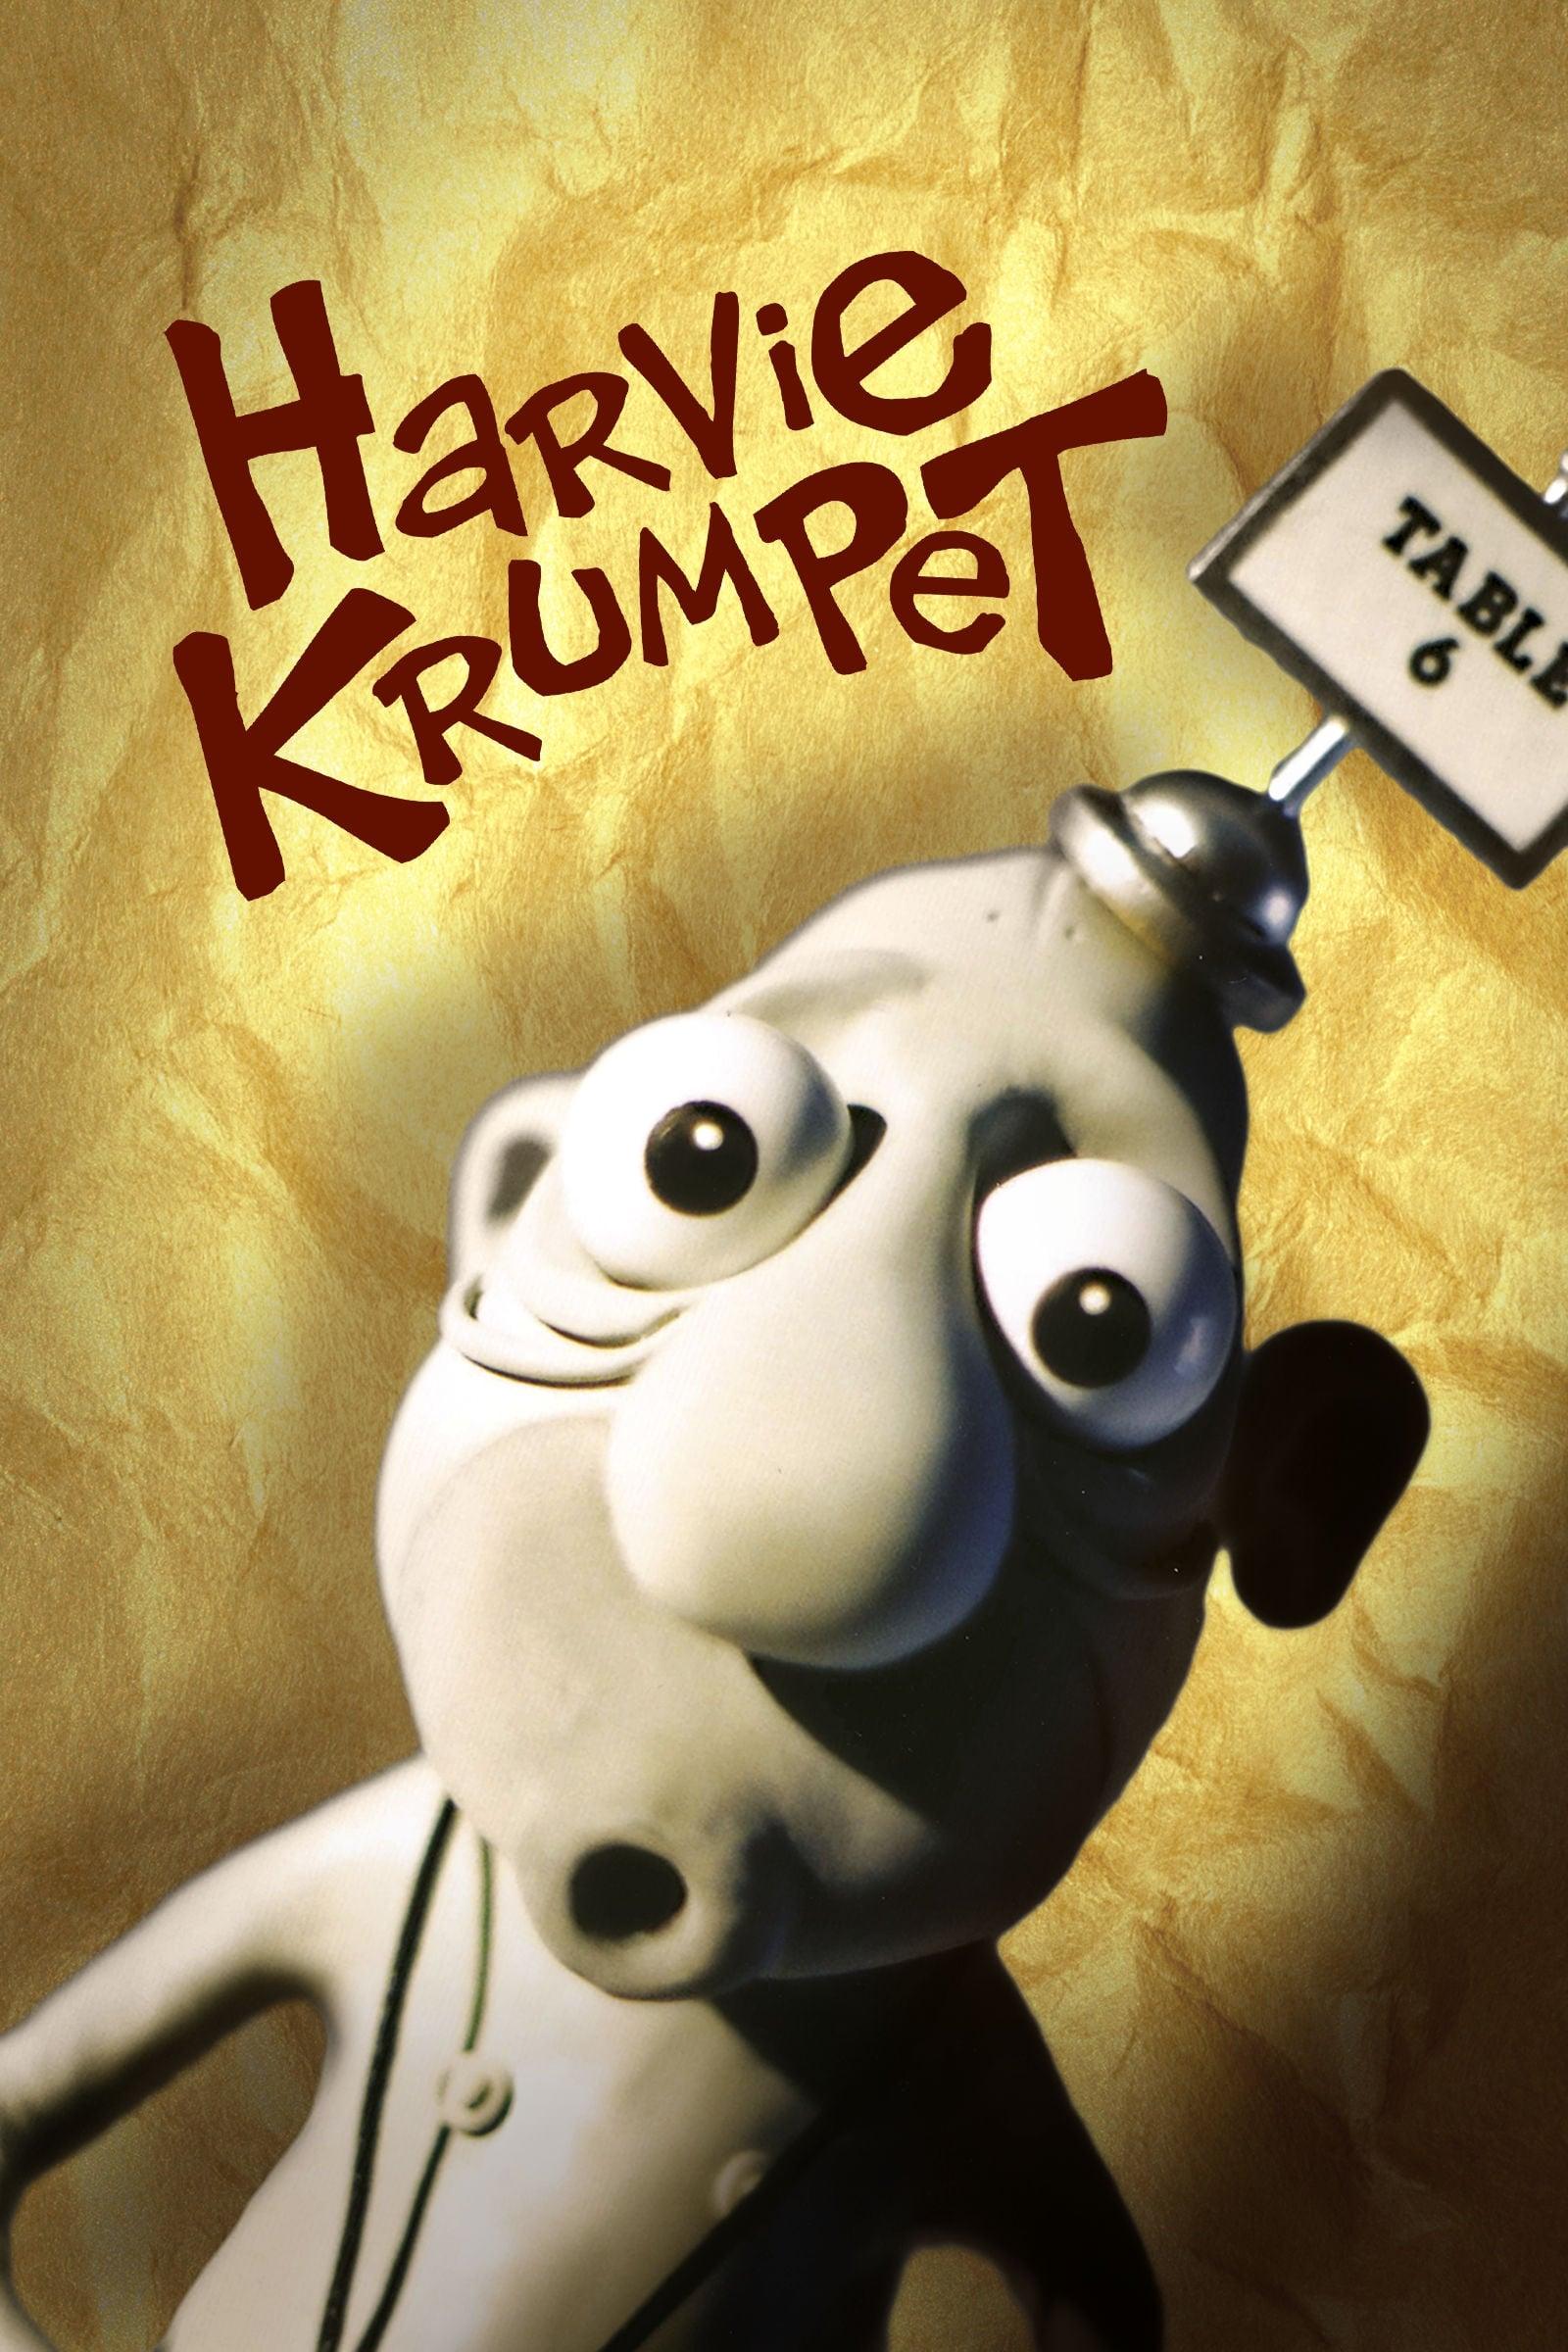 Harvie Krumpet poster